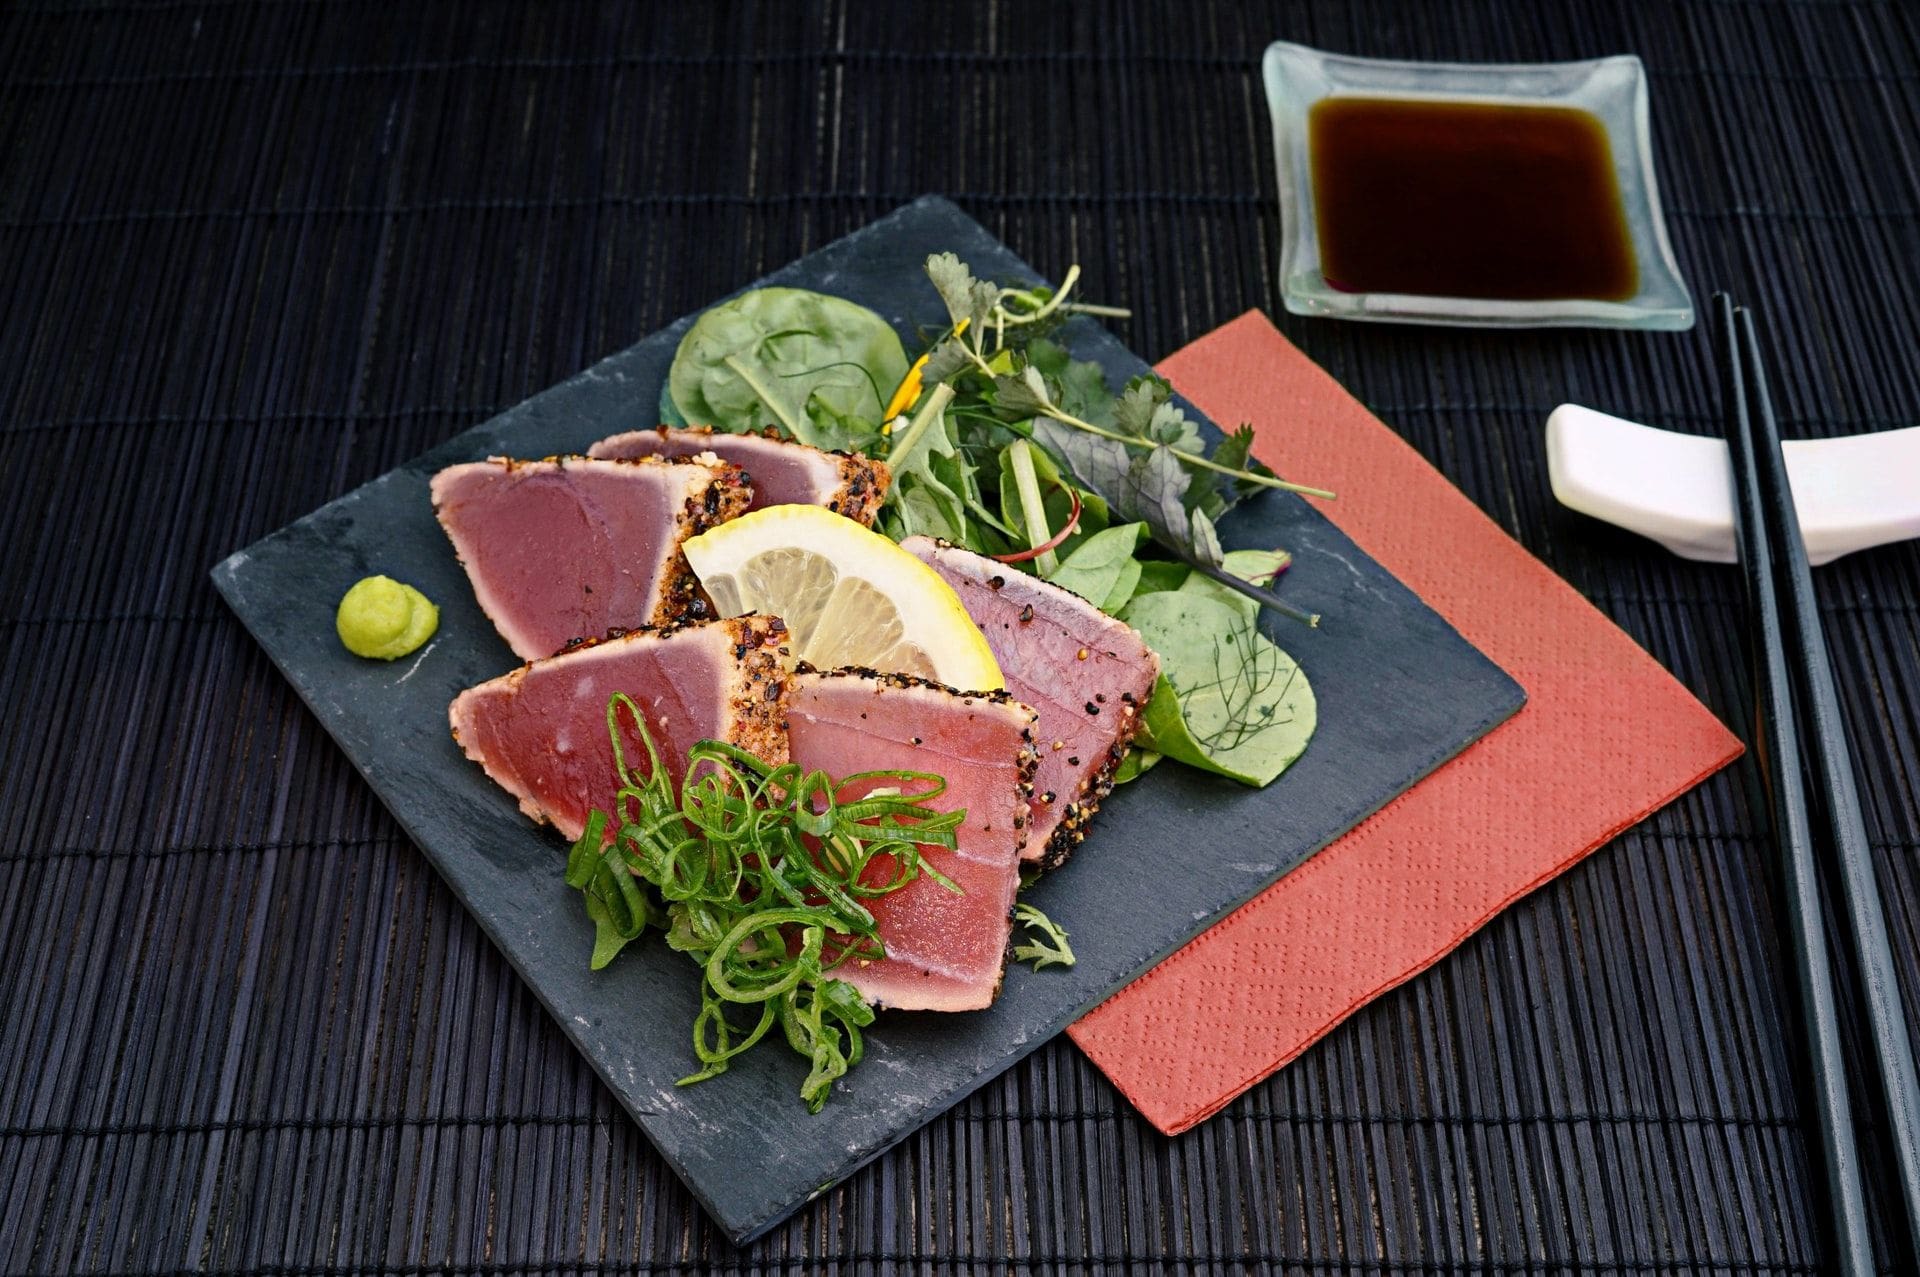 tuna with salad at a restaurant